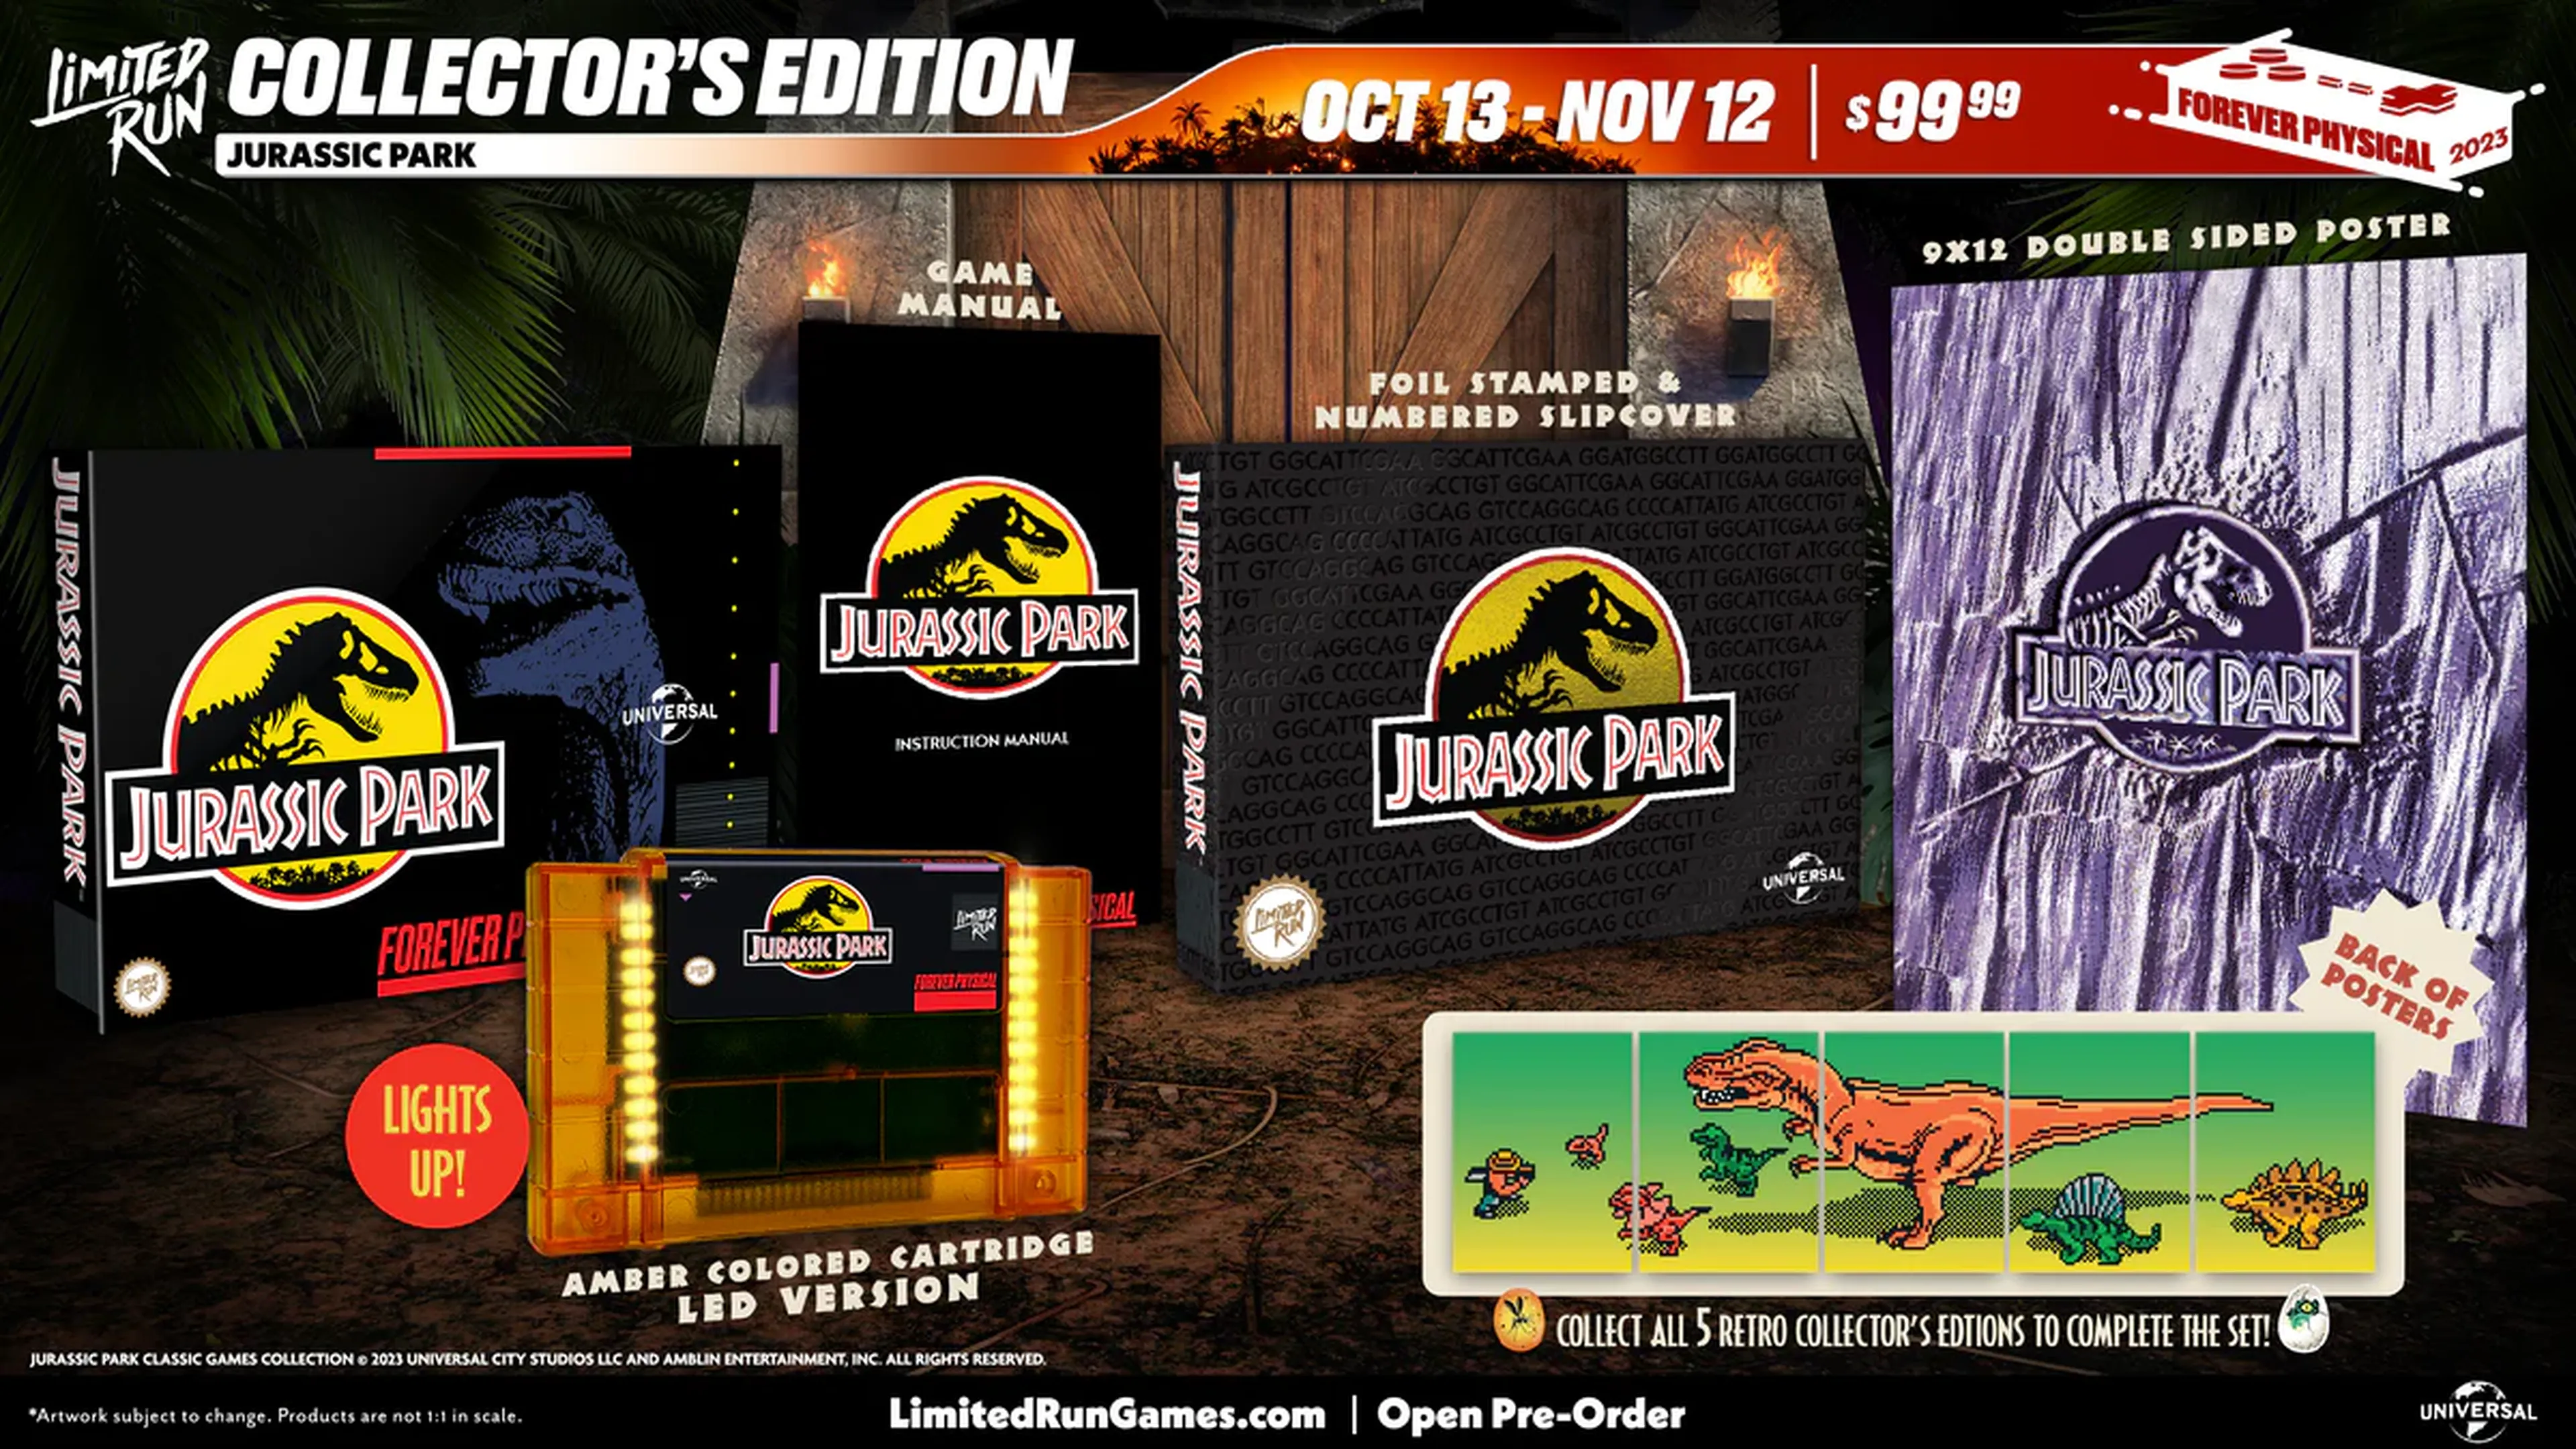 Jurassic Park Limited Run Games